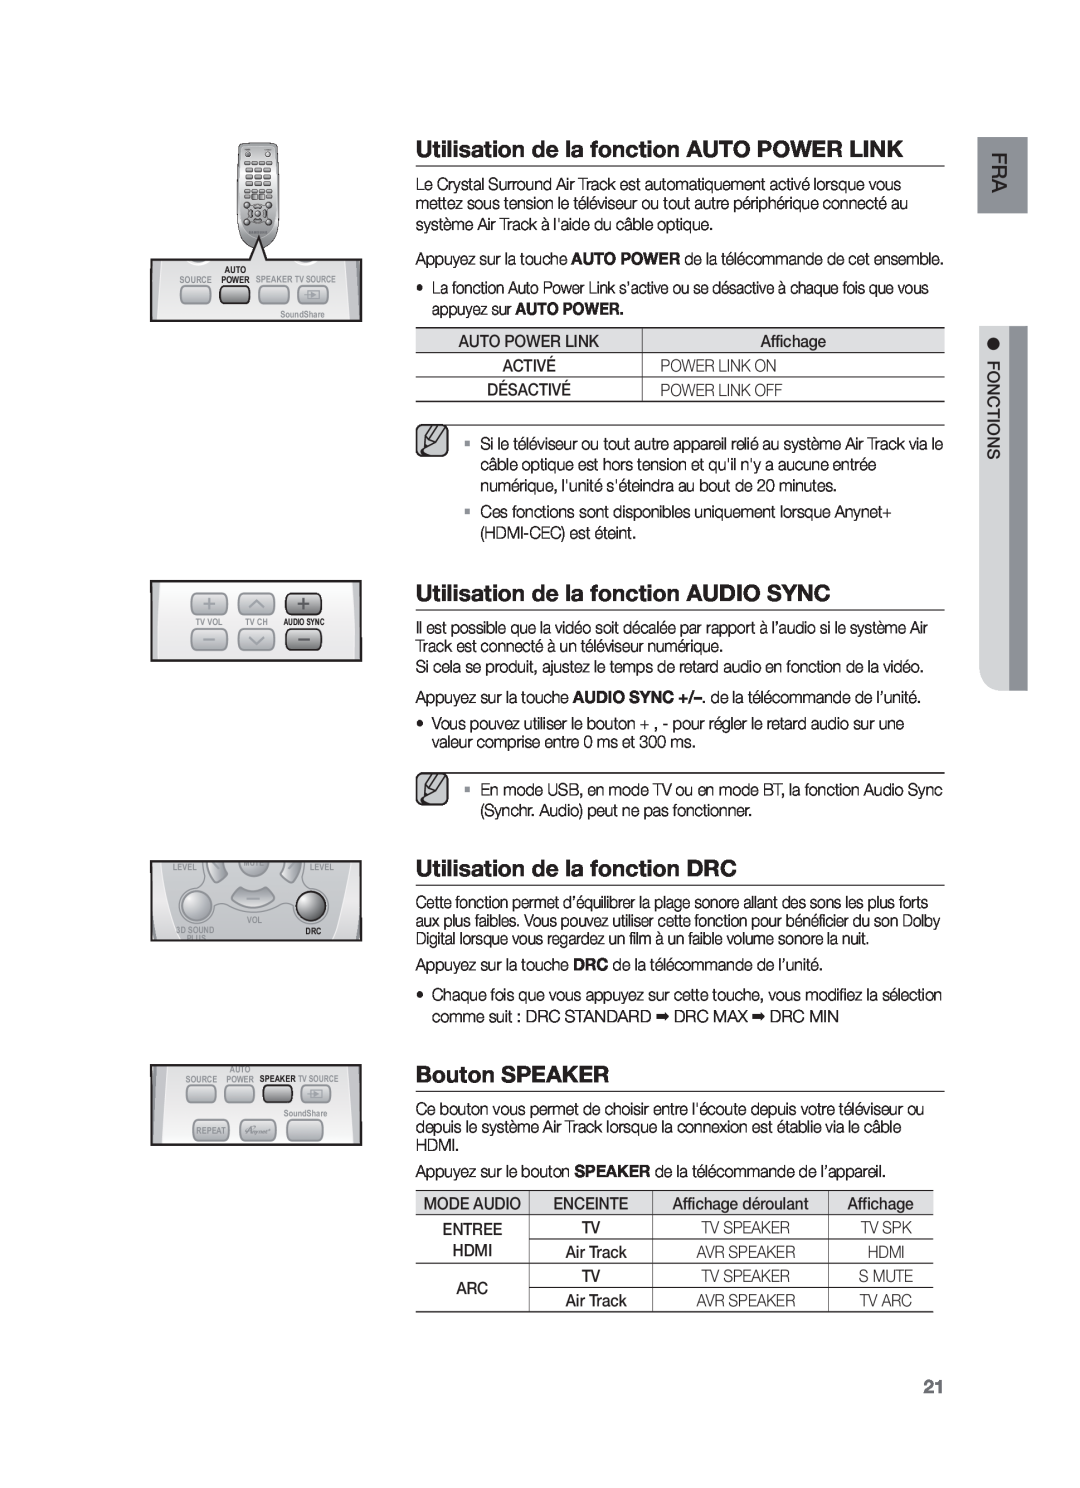 Samsung HW-F550/XN manual Utilisation de la fonction AUTO POWER LINK, Utilisation de la fonction AUDIO SYNC, Bouton SPEAKER 